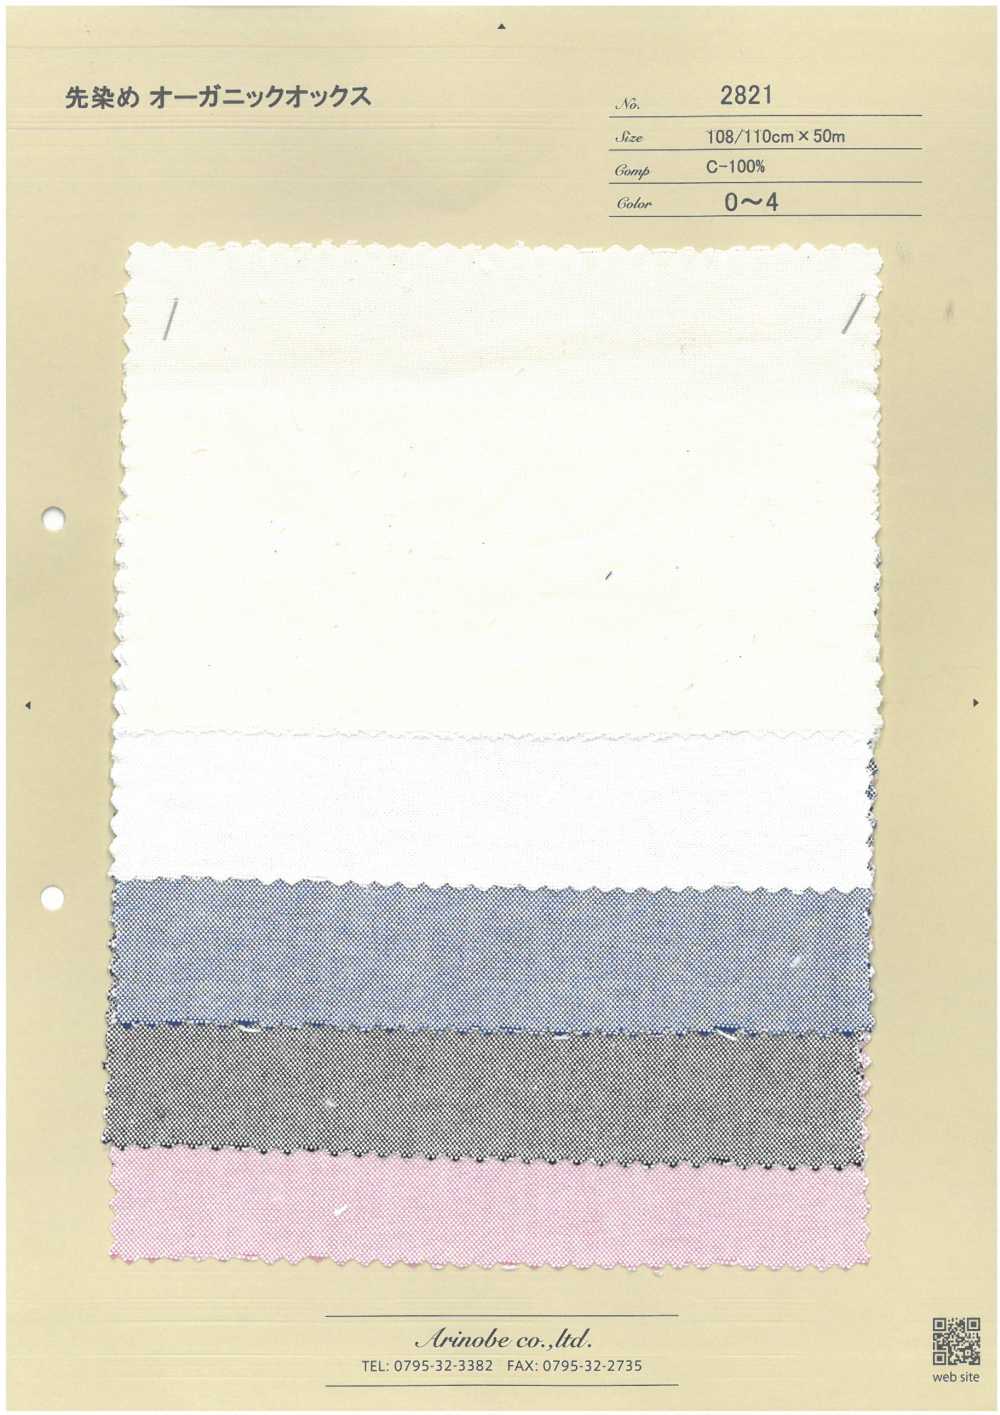 2821 Yarn Dyed Organic Oxford[Textile / Fabric] ARINOBE CO., LTD.